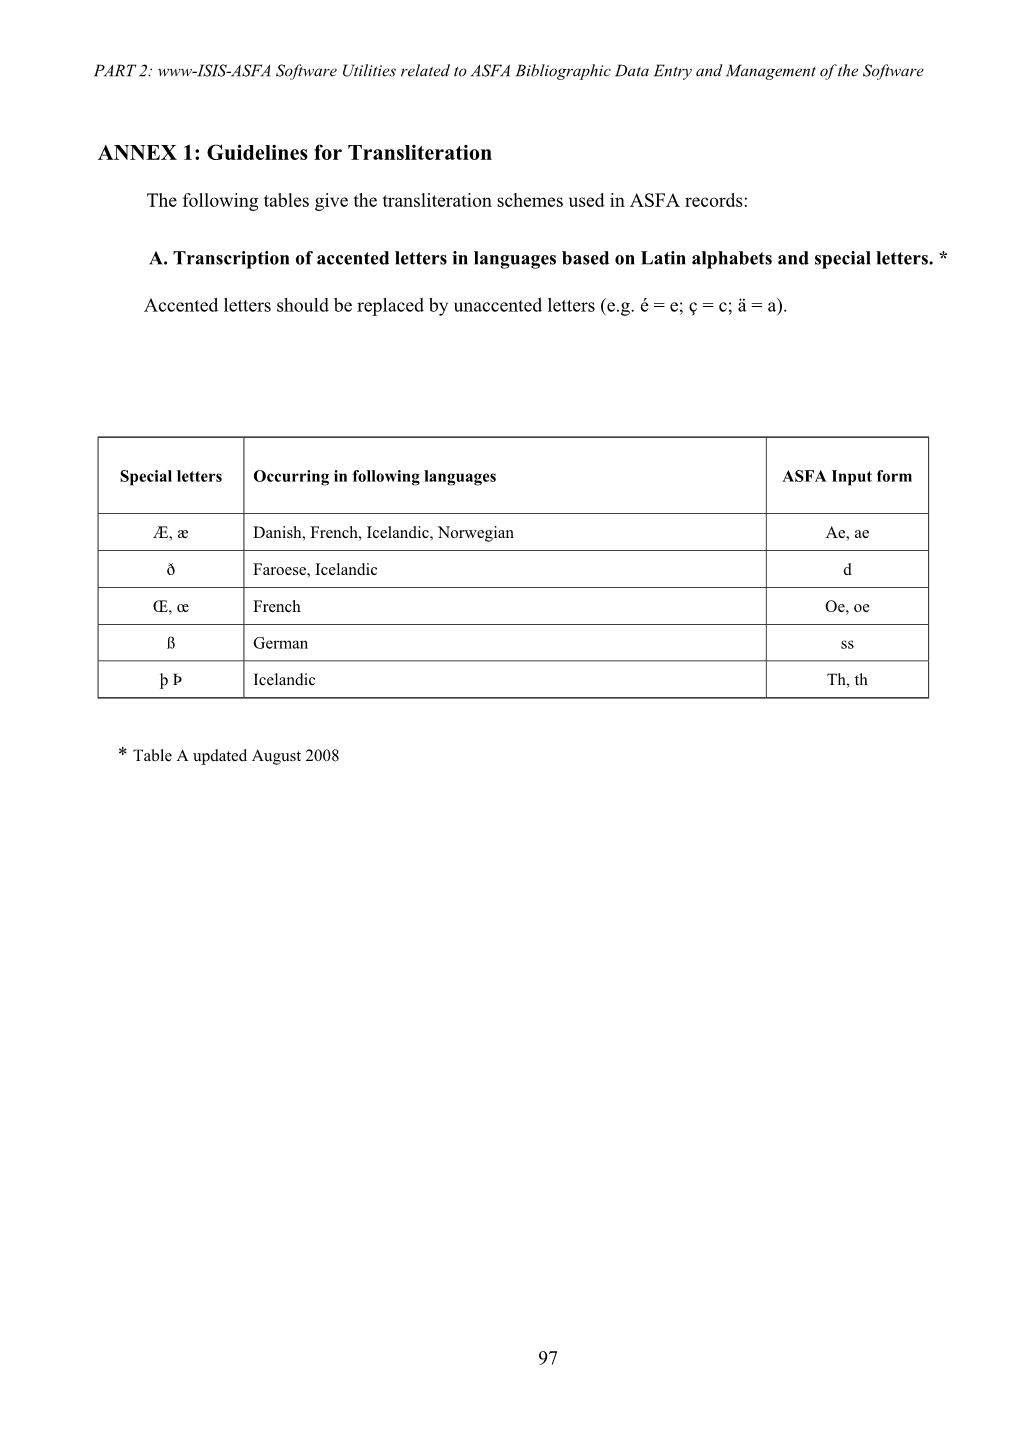 ANNEX 1: Guidelines for Transliteration